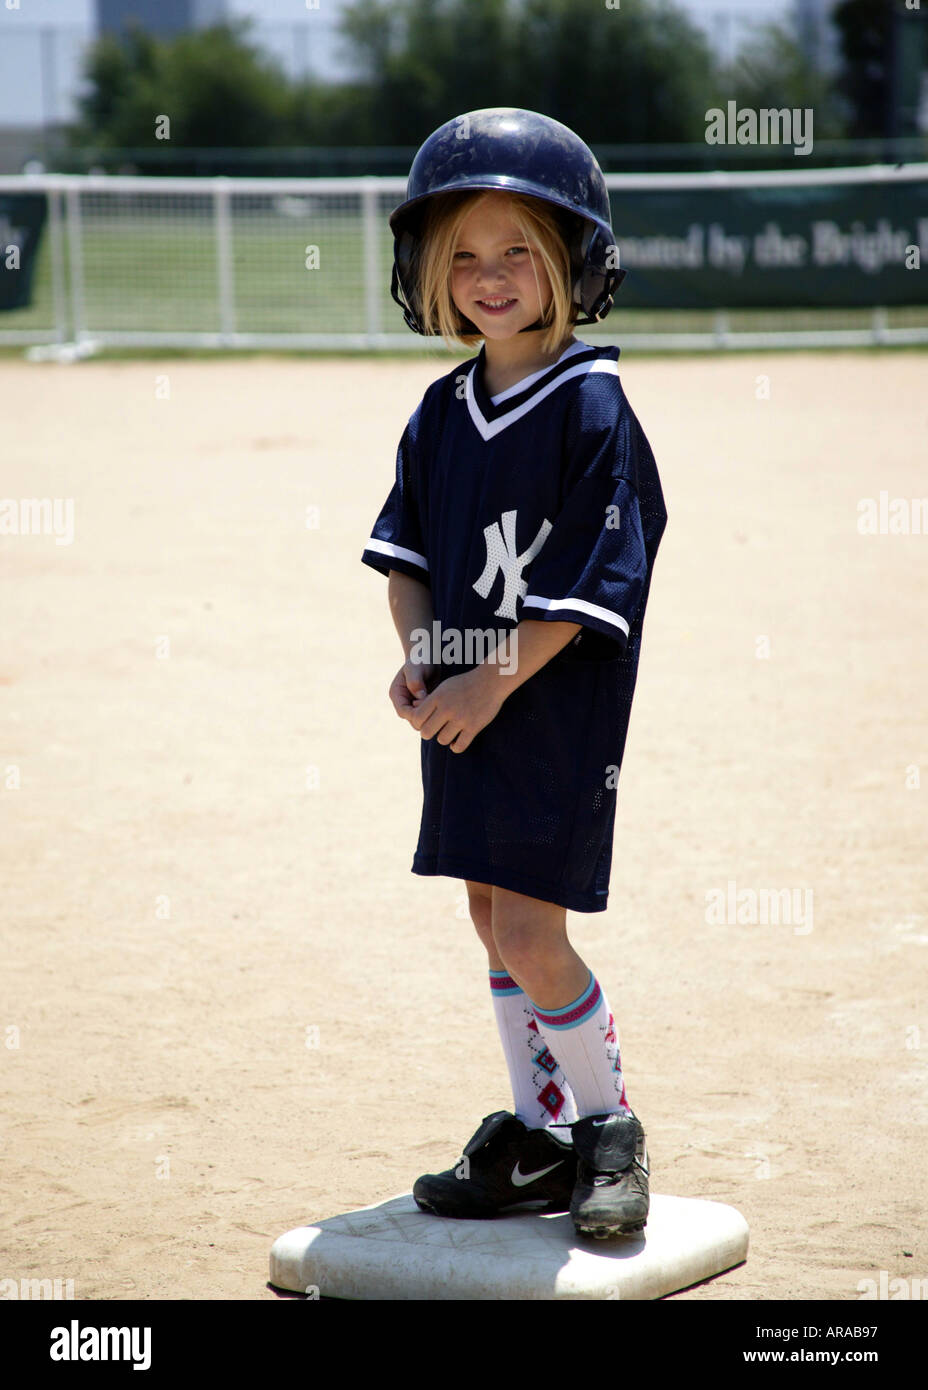 little girl playing baseball Stock Photo